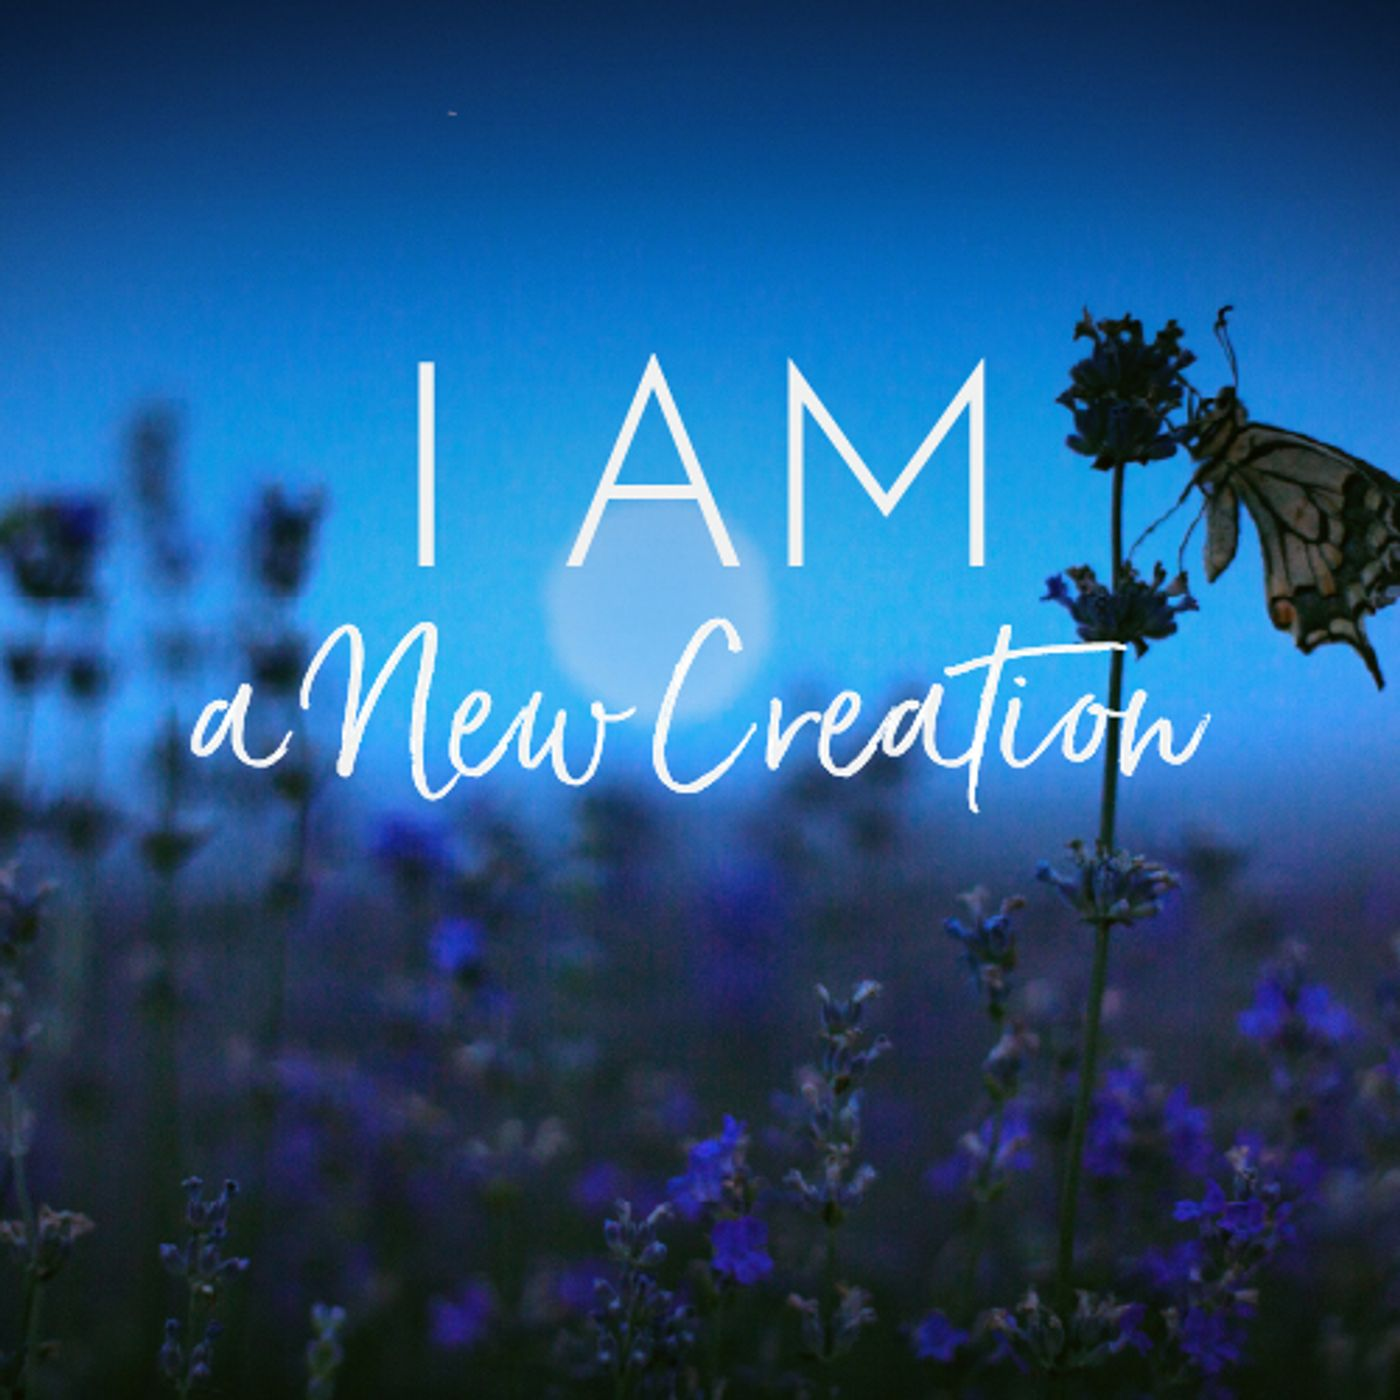 I Am a New Creation